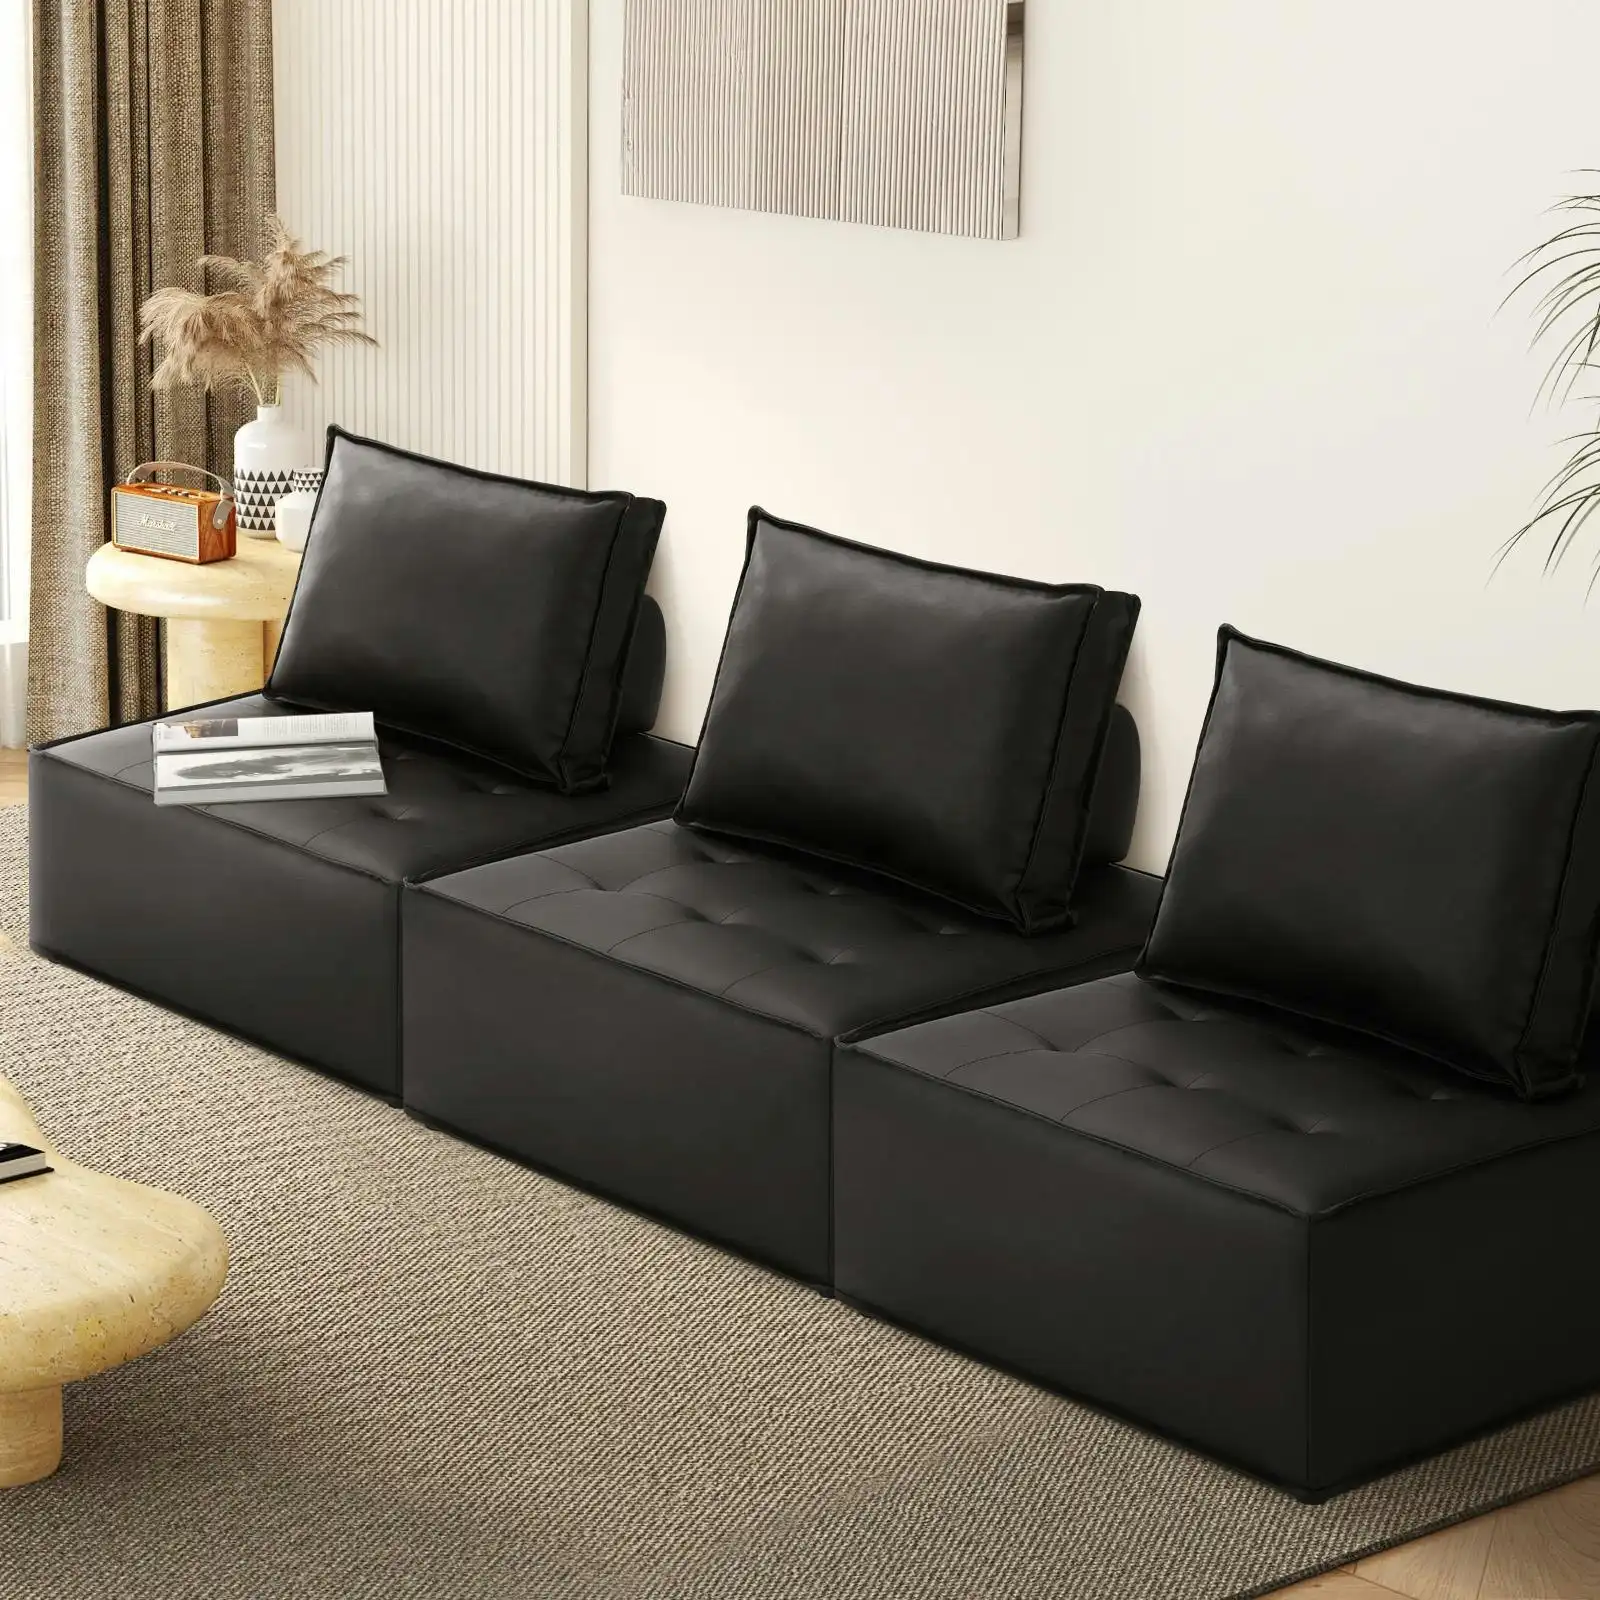 Oikiture 3PC Modular Sofa Lounge Chair Armless TOFU Back PU Leather Black